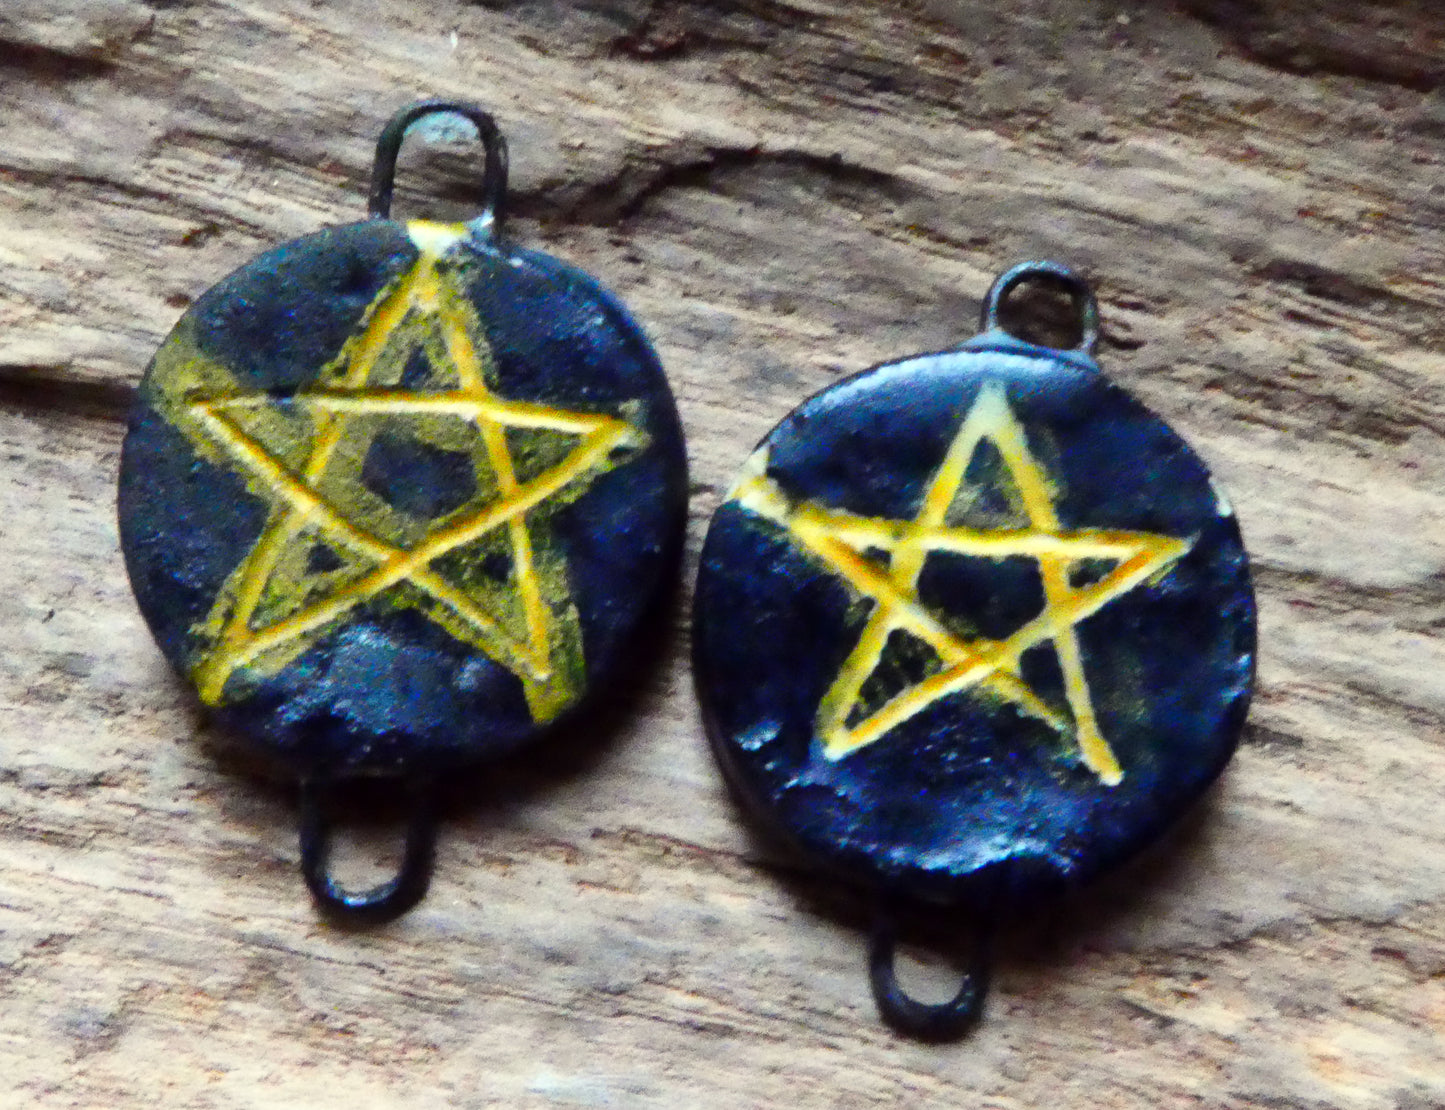 Ceramic Pentagram Earring Connectors - Yellow